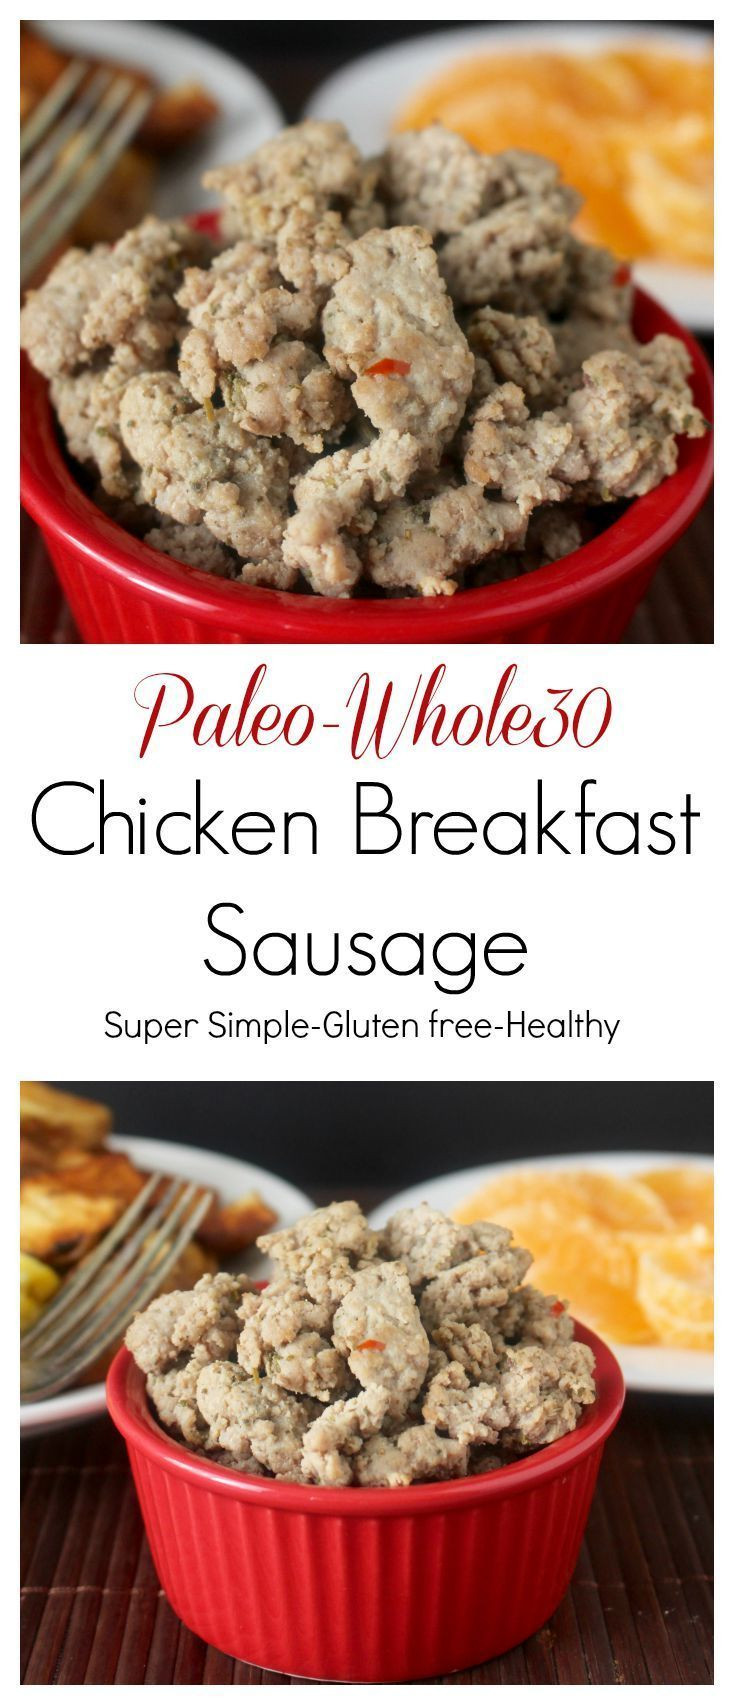 Paleo Chicken Sausage Recipes
 Paleo Breakfast Sausage Recipe